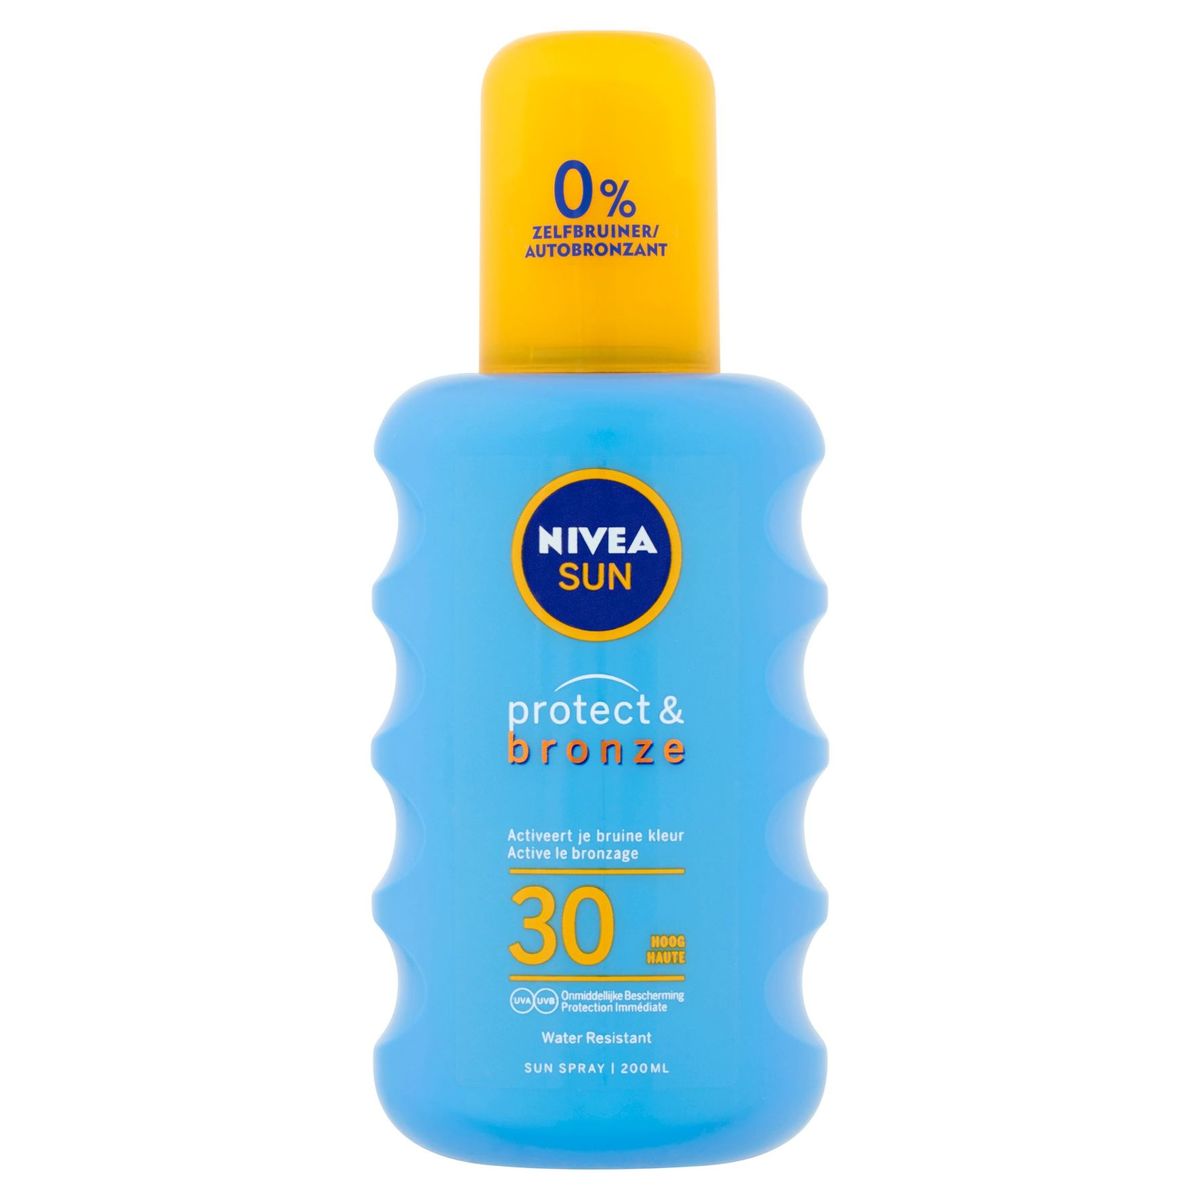 Nivea Sun Protect & Bronze Water Resistant Sun Spray 30 Haute 200 ml